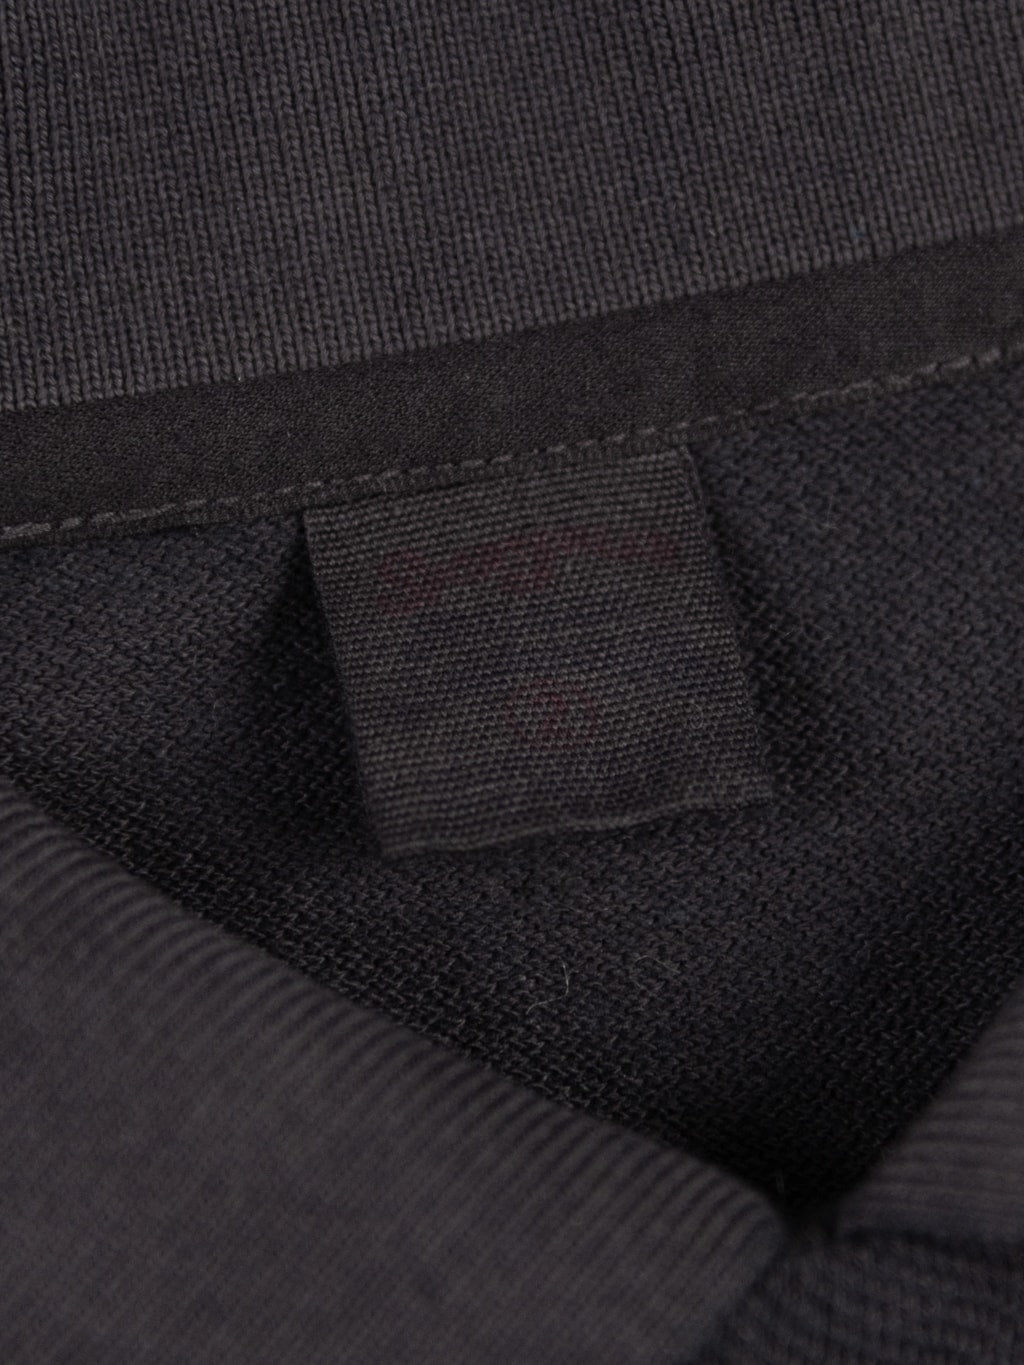 ues polo shirt black interior label